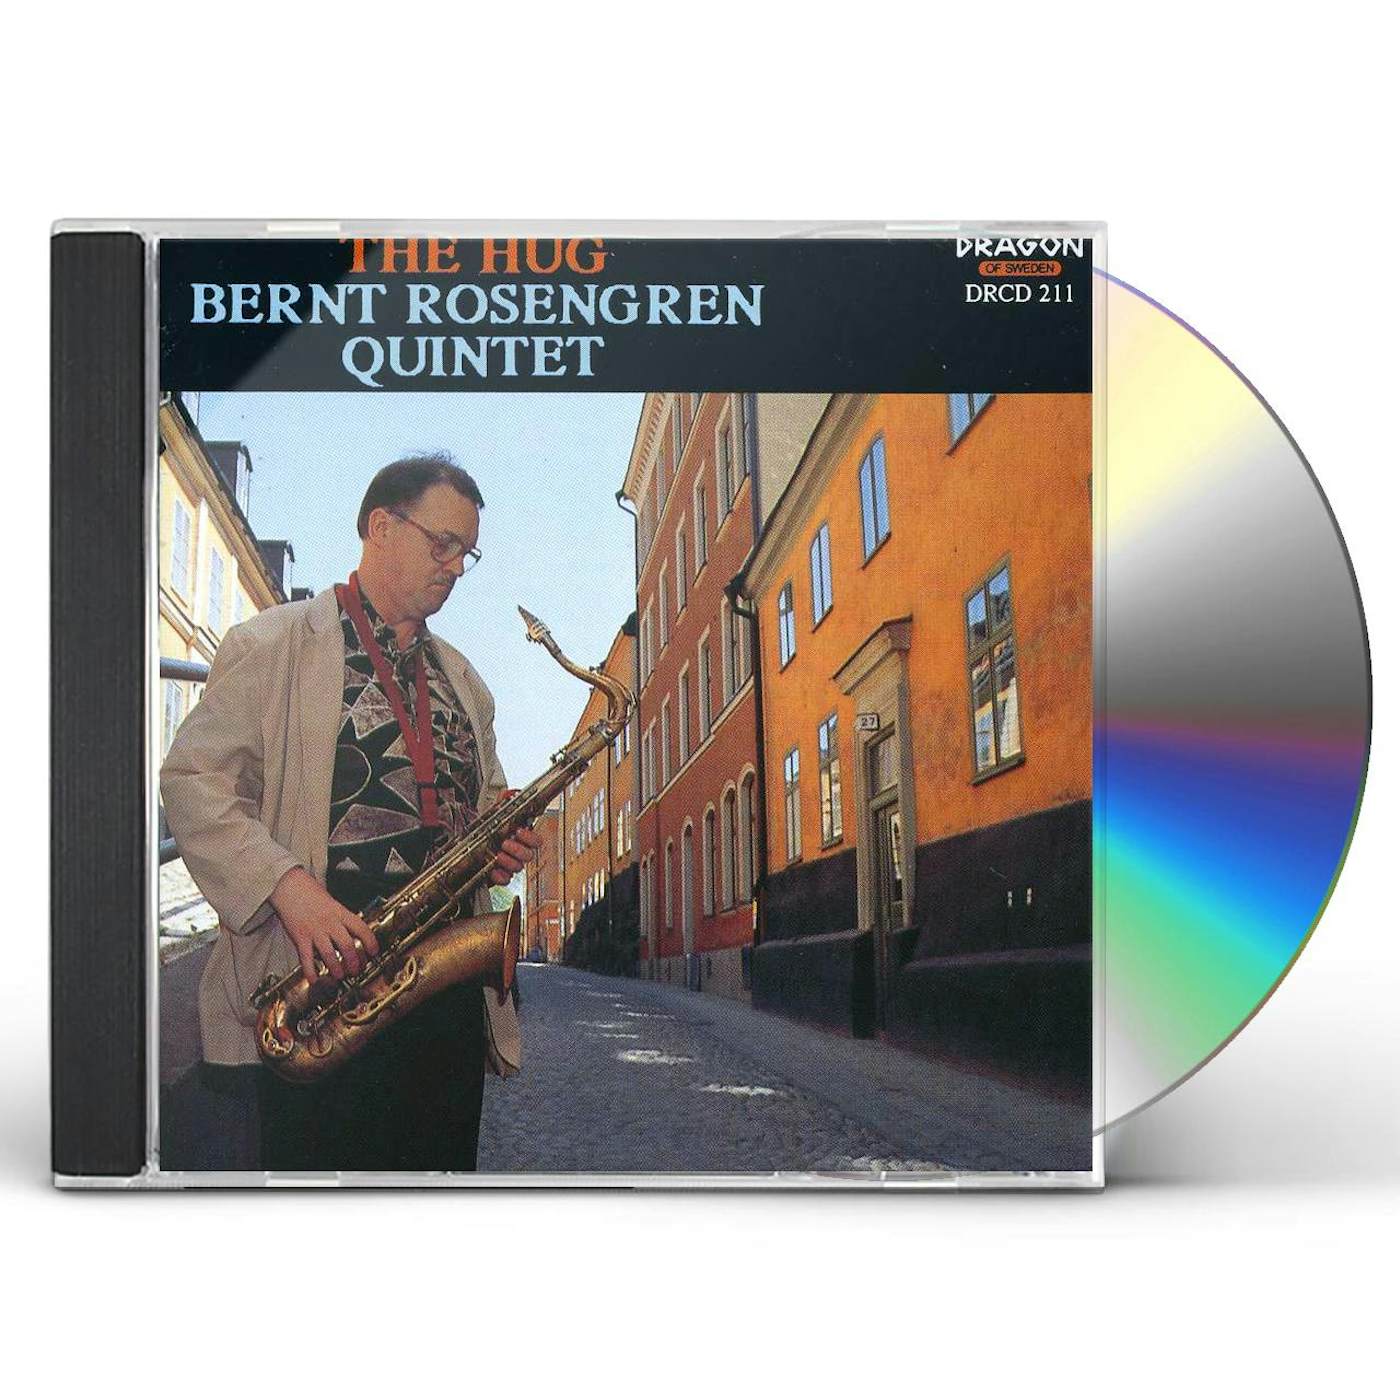 Bernt Rosengren HUG CD